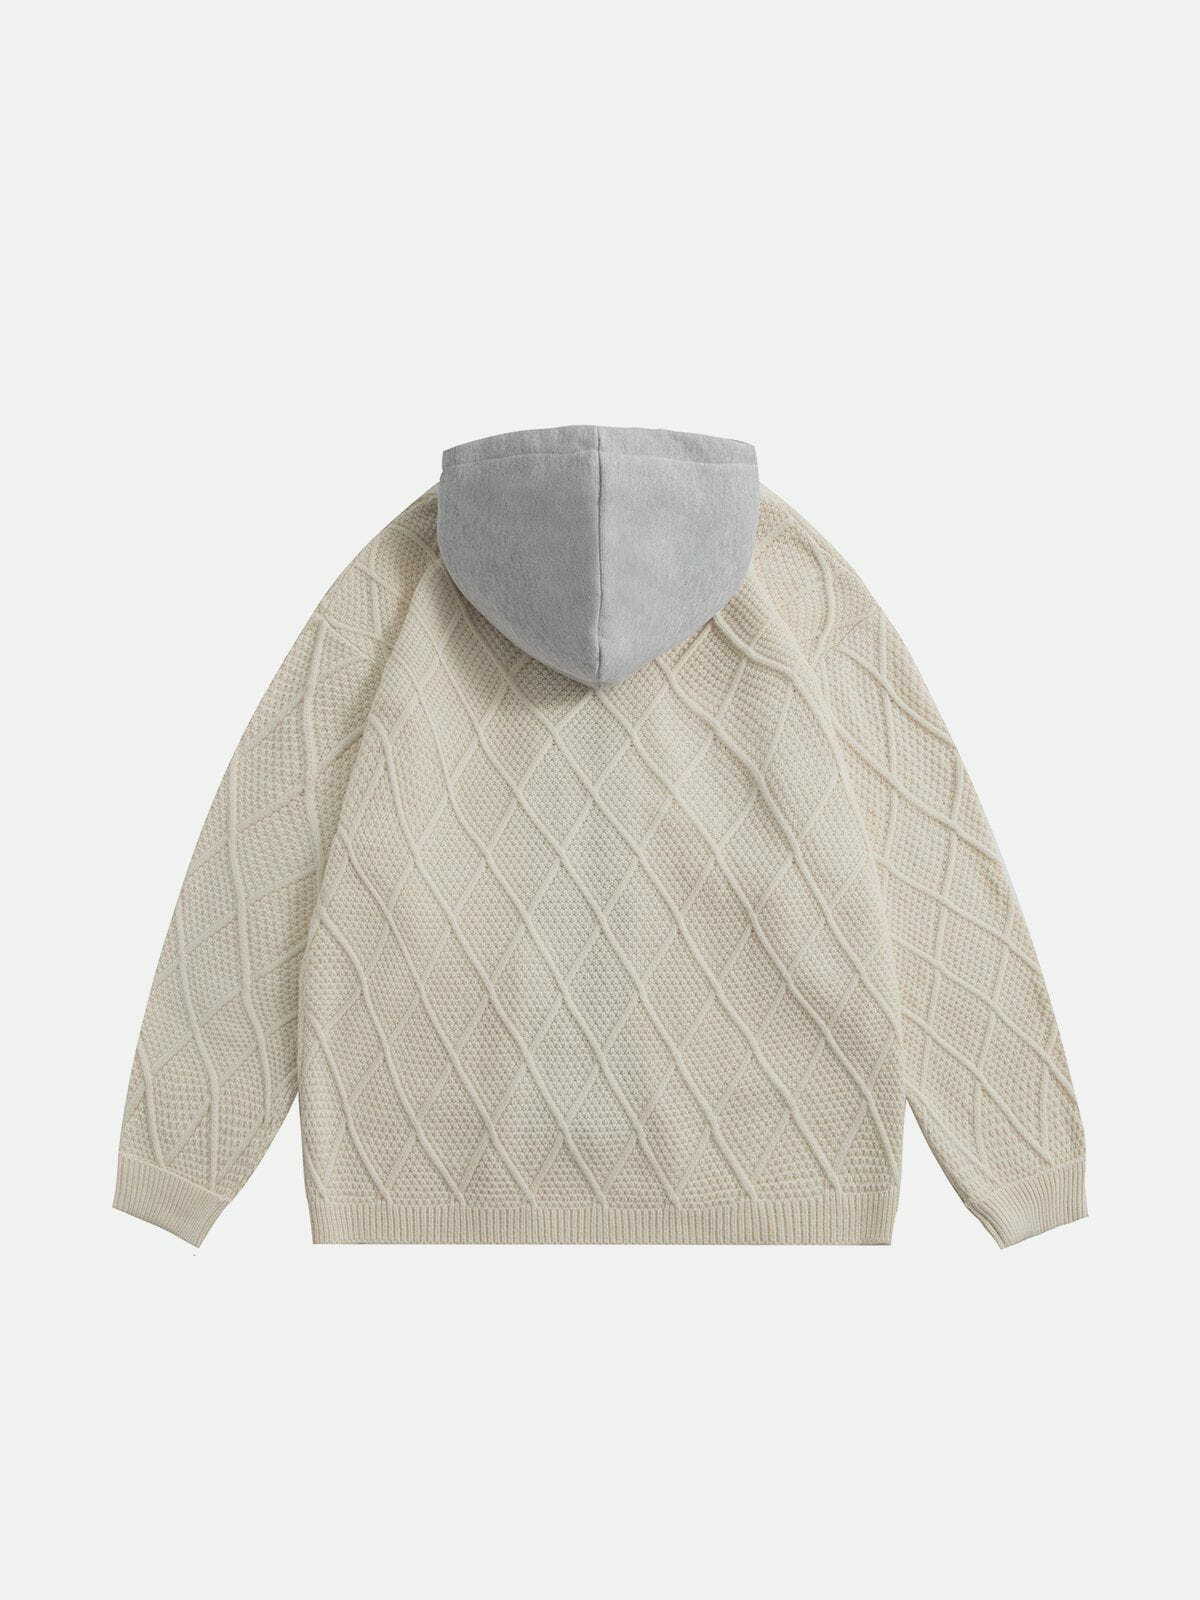 unique duallayer zipup hoodie edgy streetwear 8447